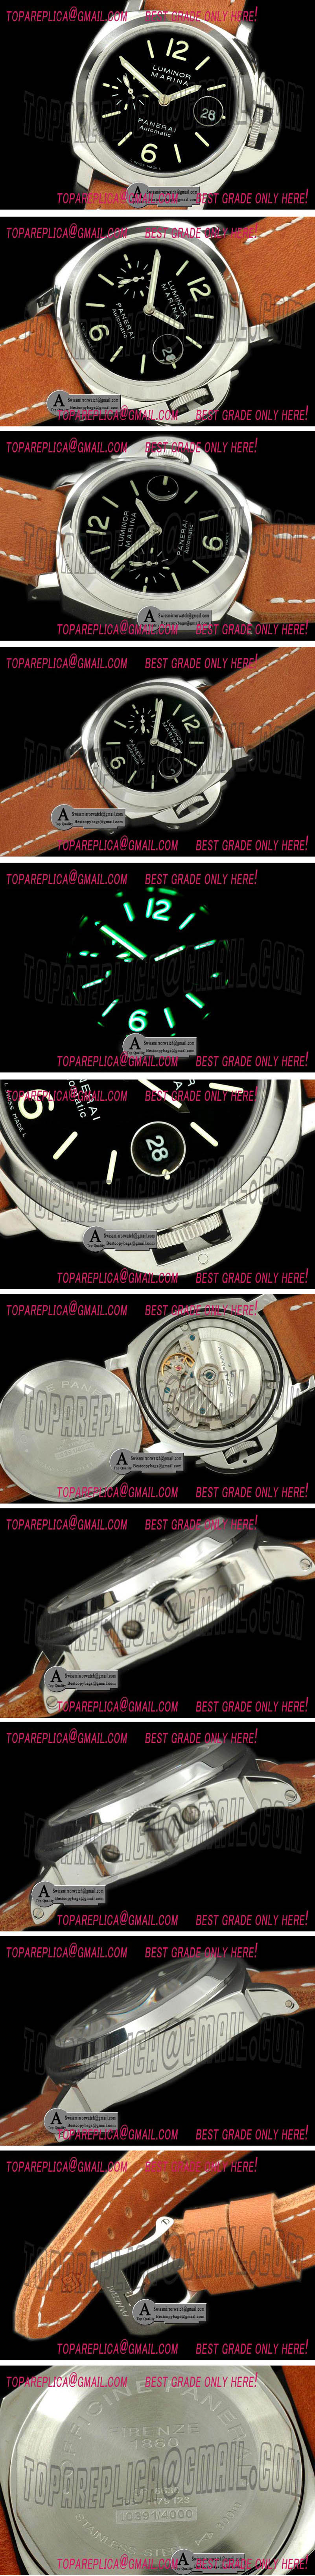 Panerai Pam 104I SS/Leather Black A-7750 28800bph Replica Watches